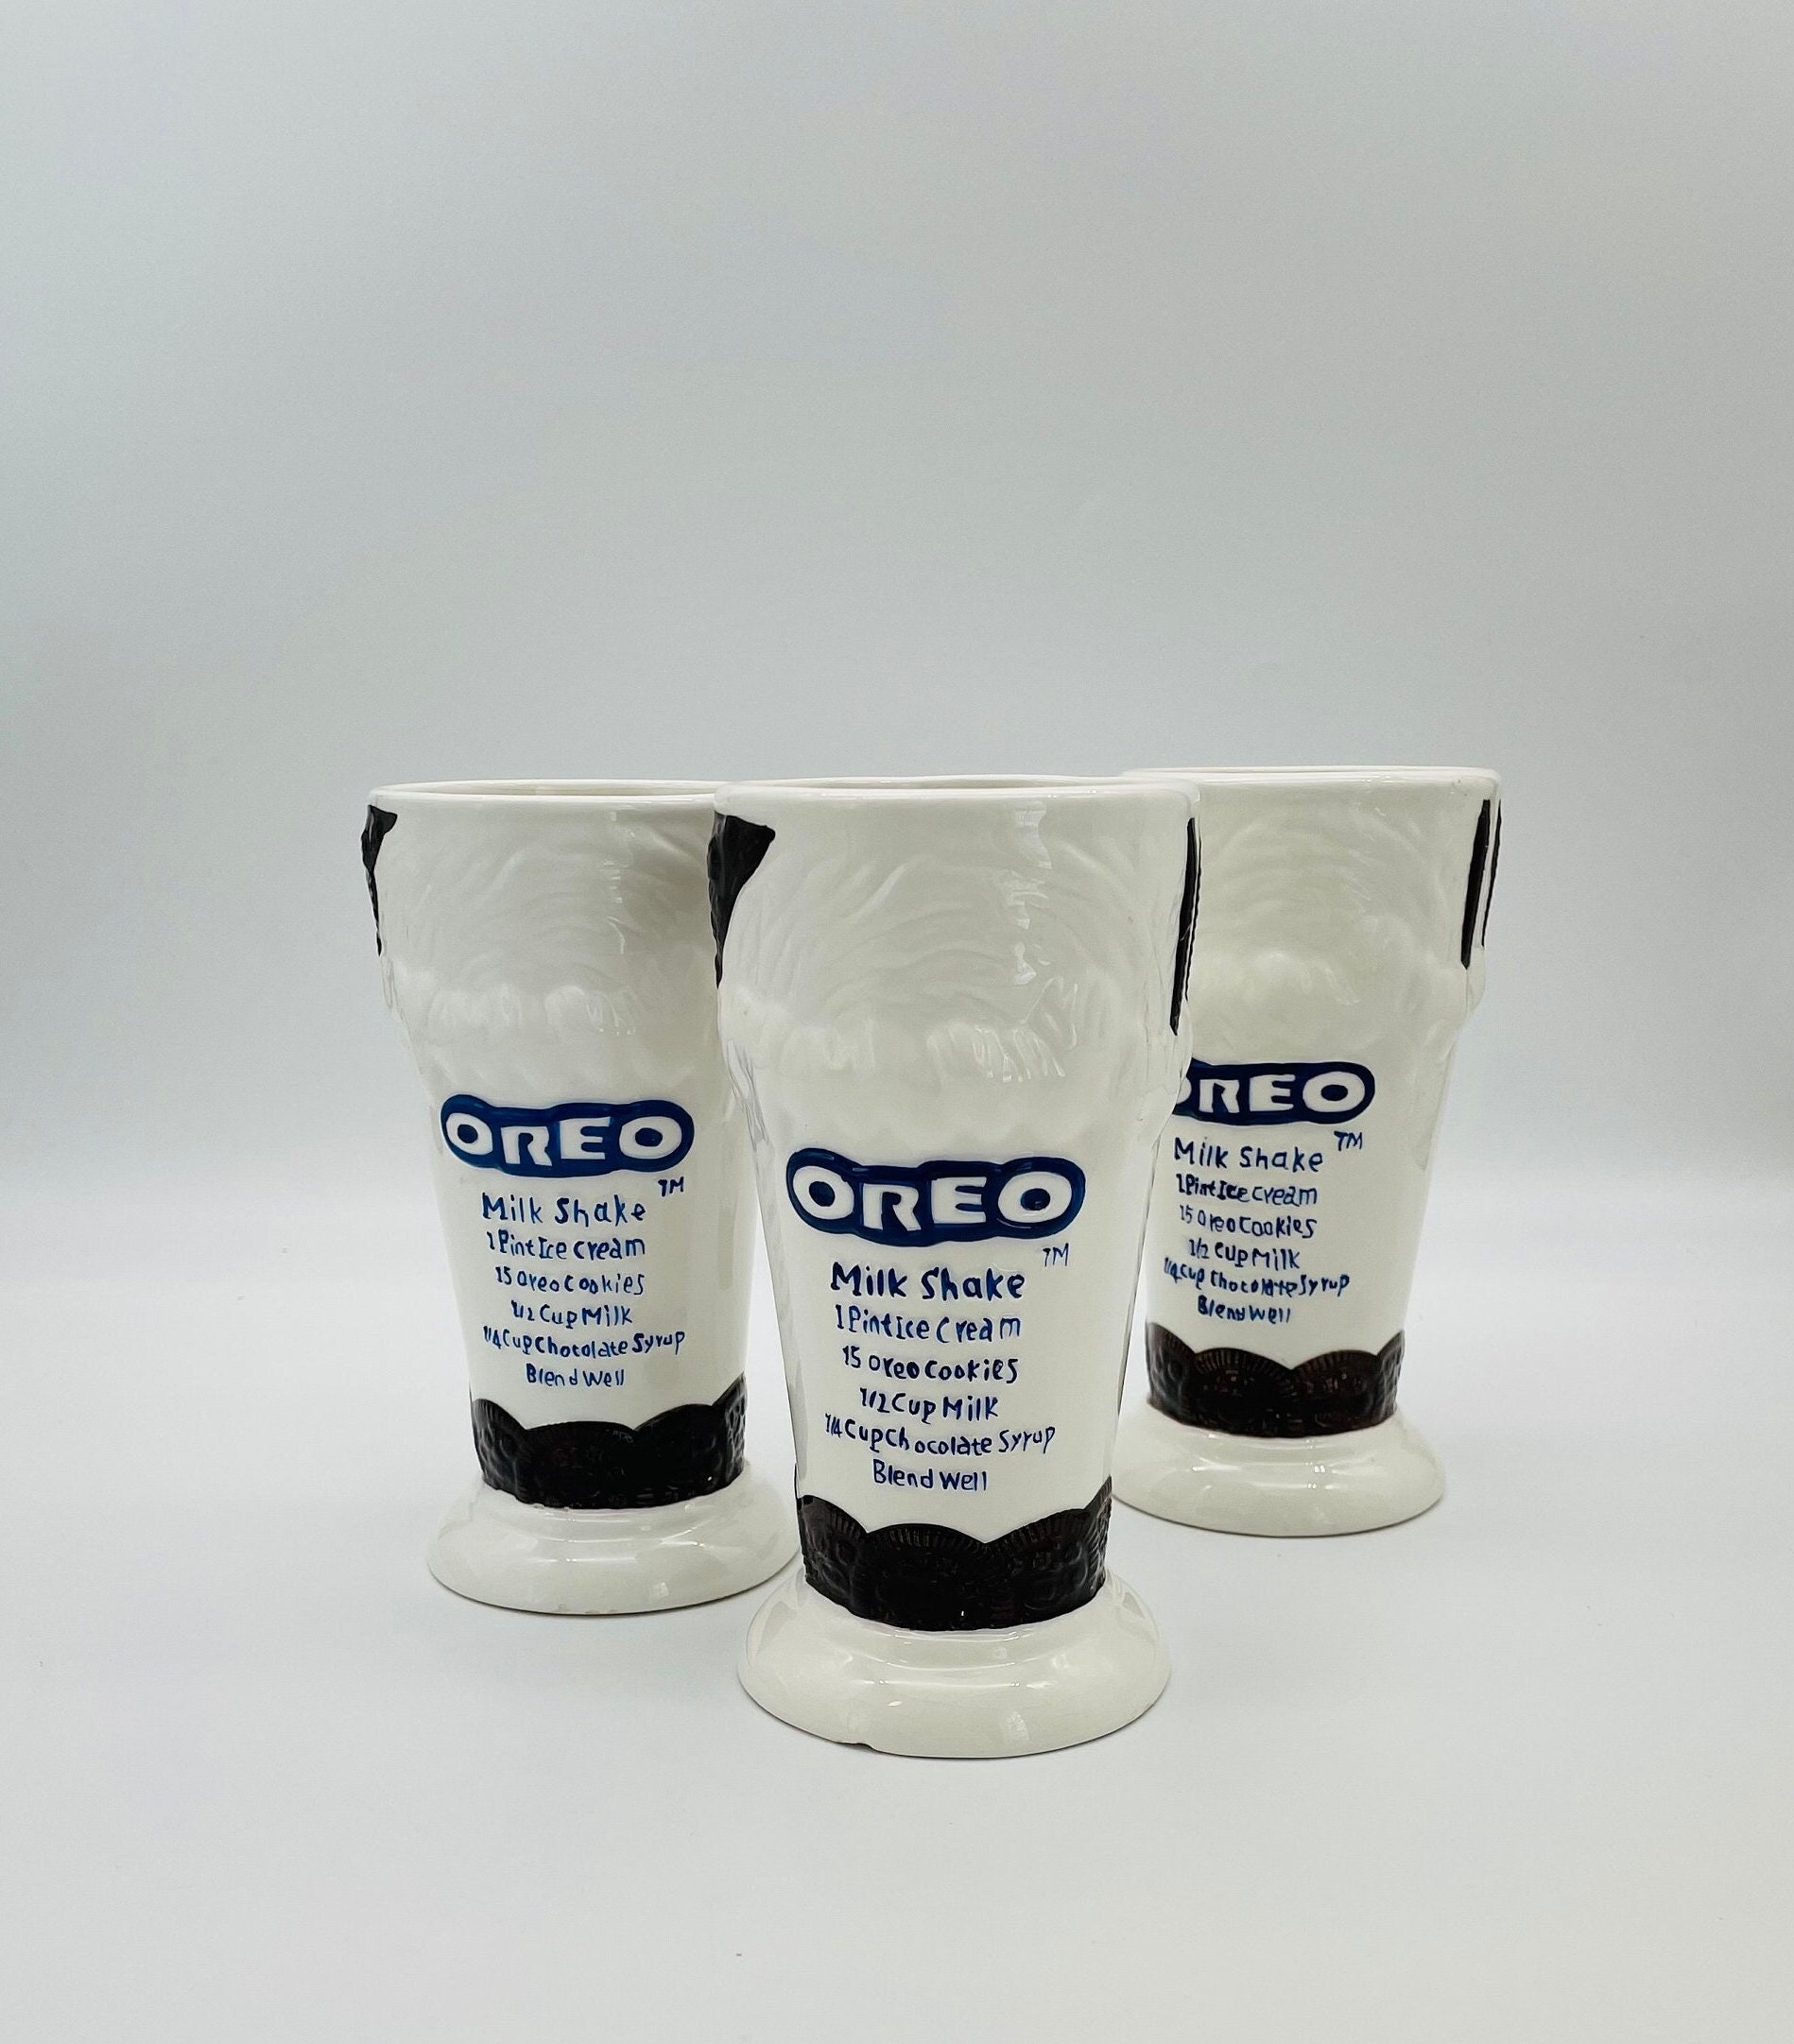 OREO Milkshake Kit Gift Set